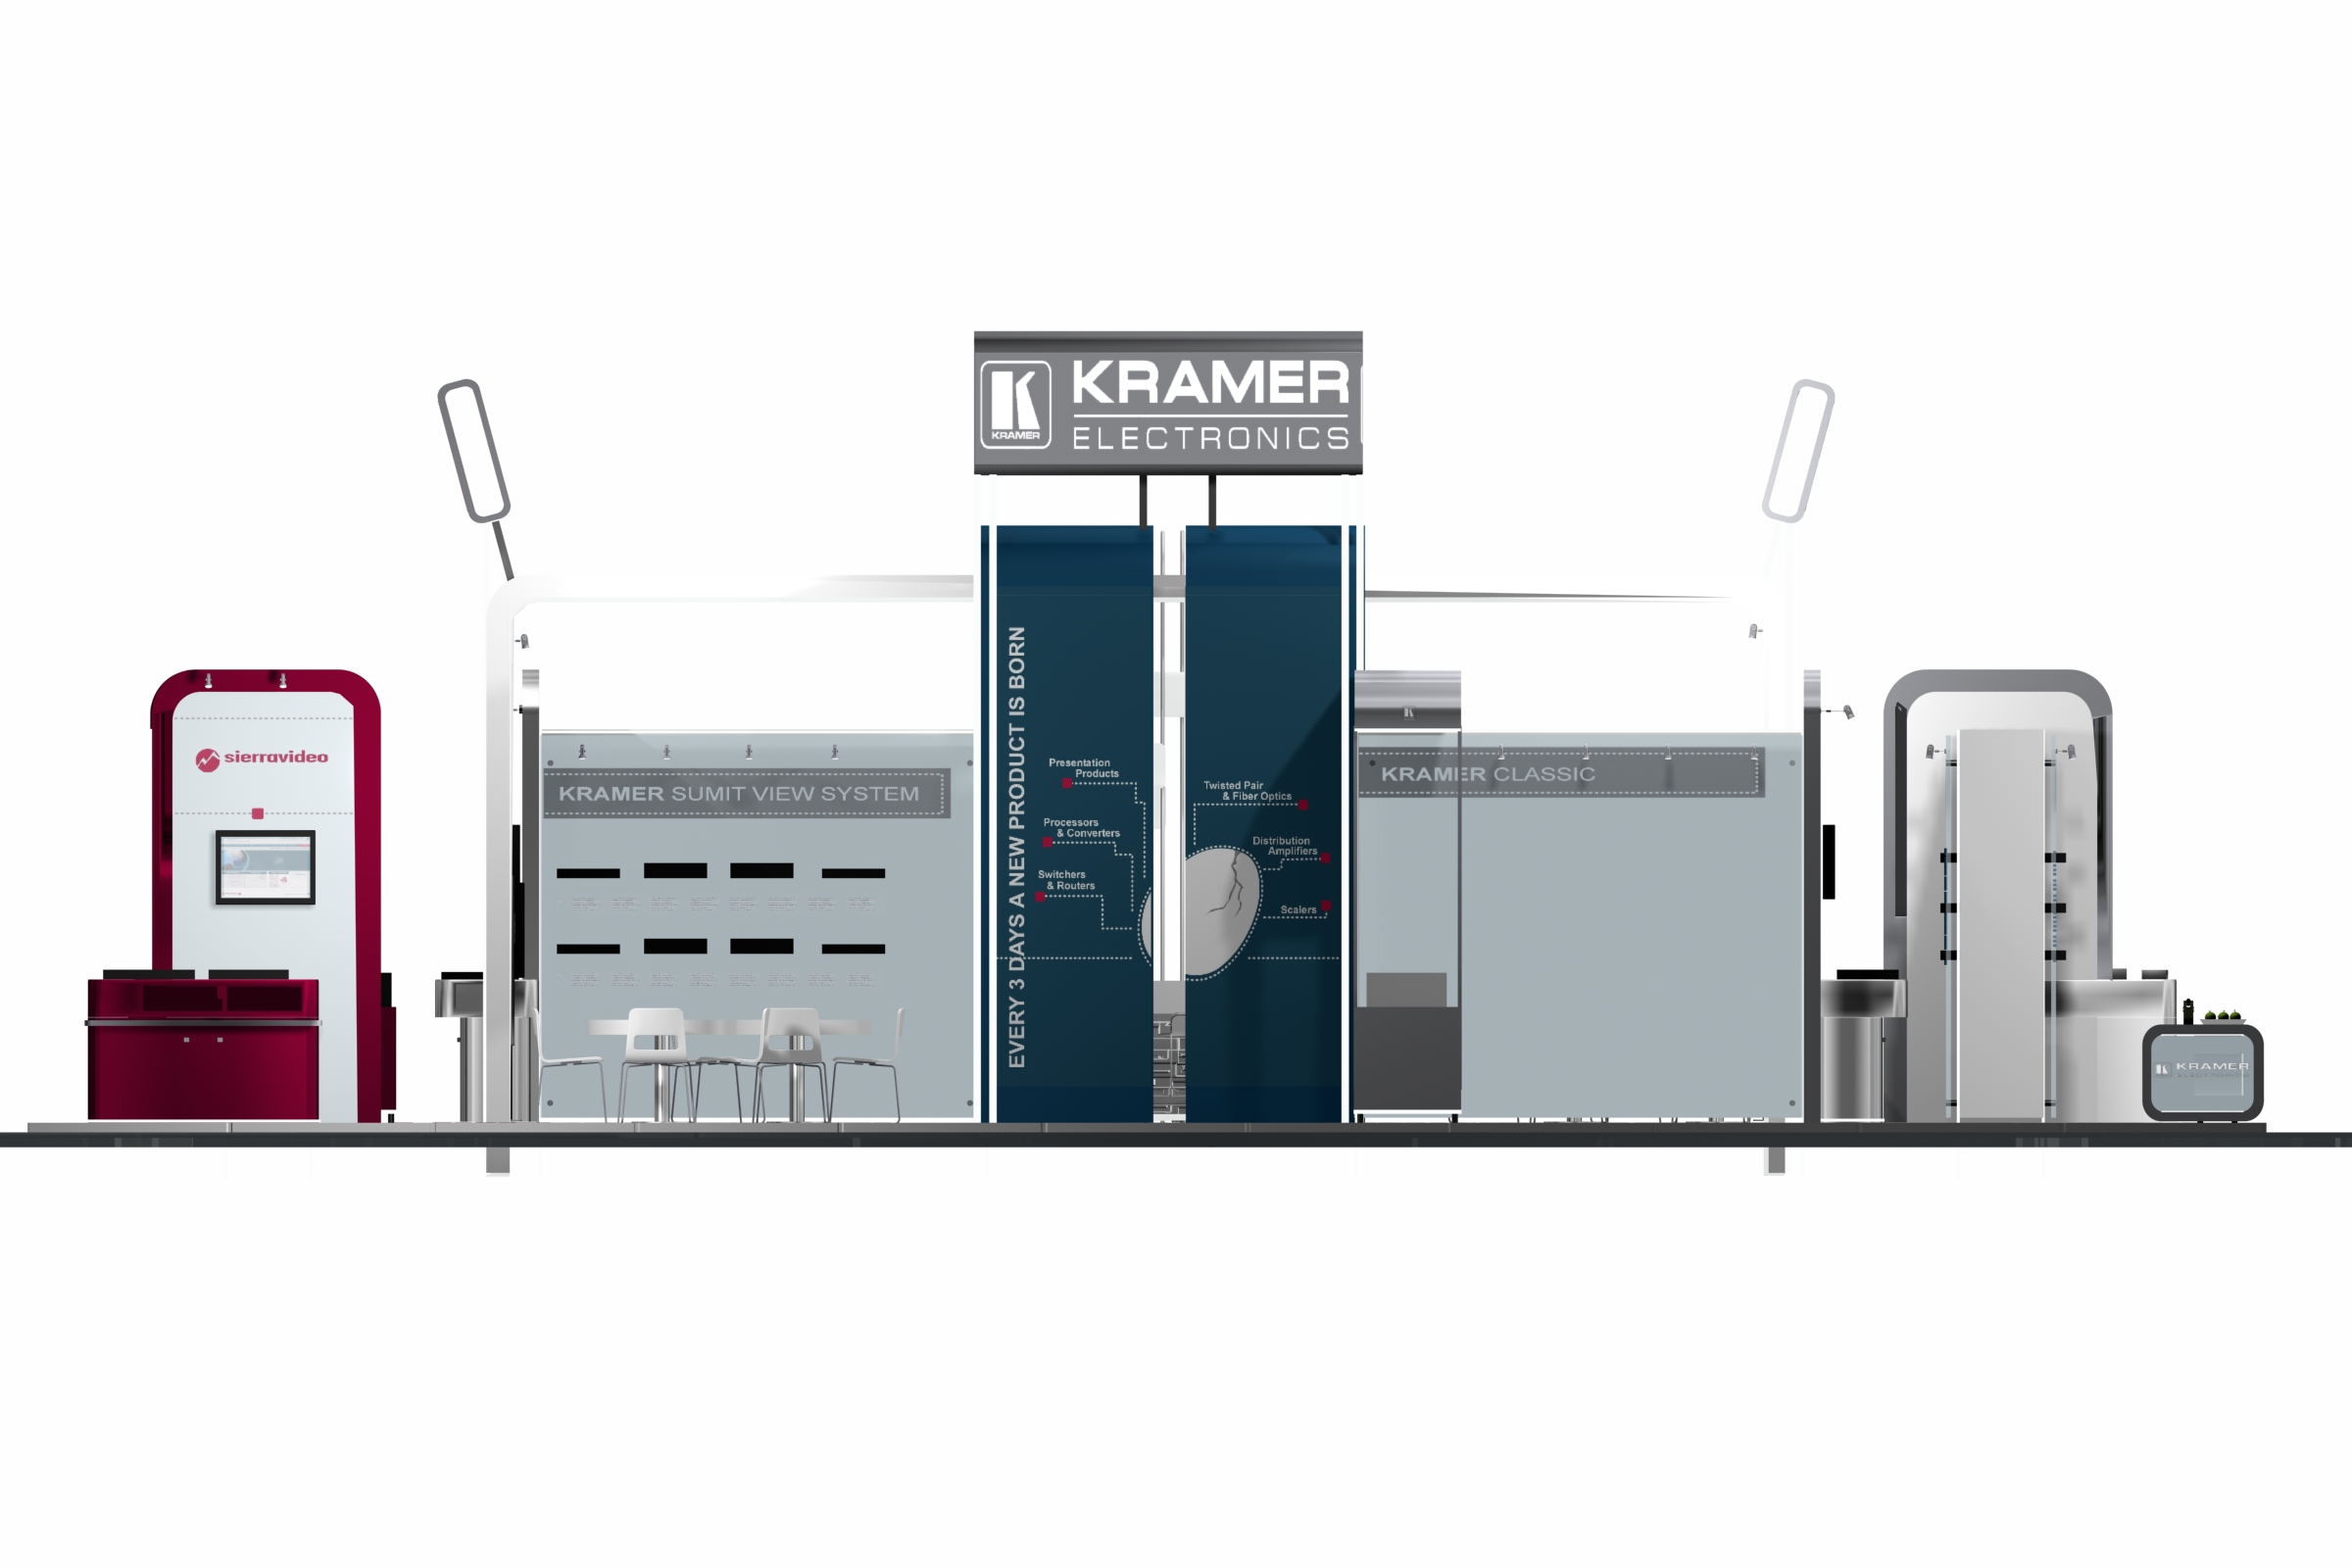 Kramer Electronics Exhibition